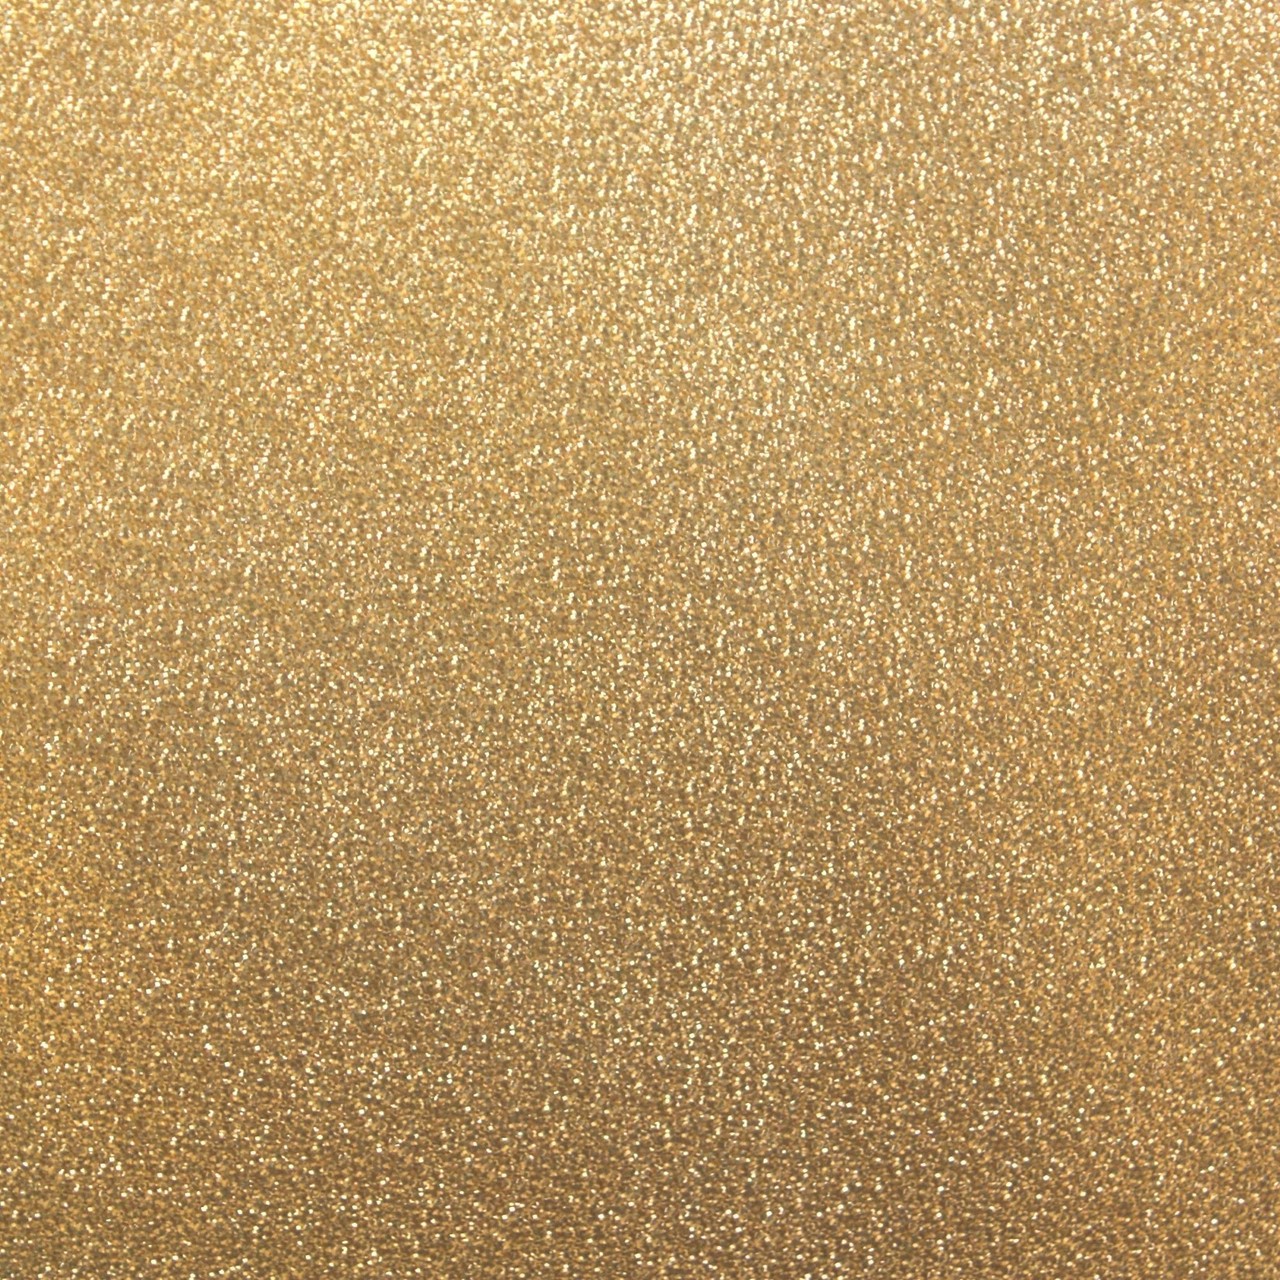 rePin image: Gold Glitter Wallpaper Gold on Pinterest